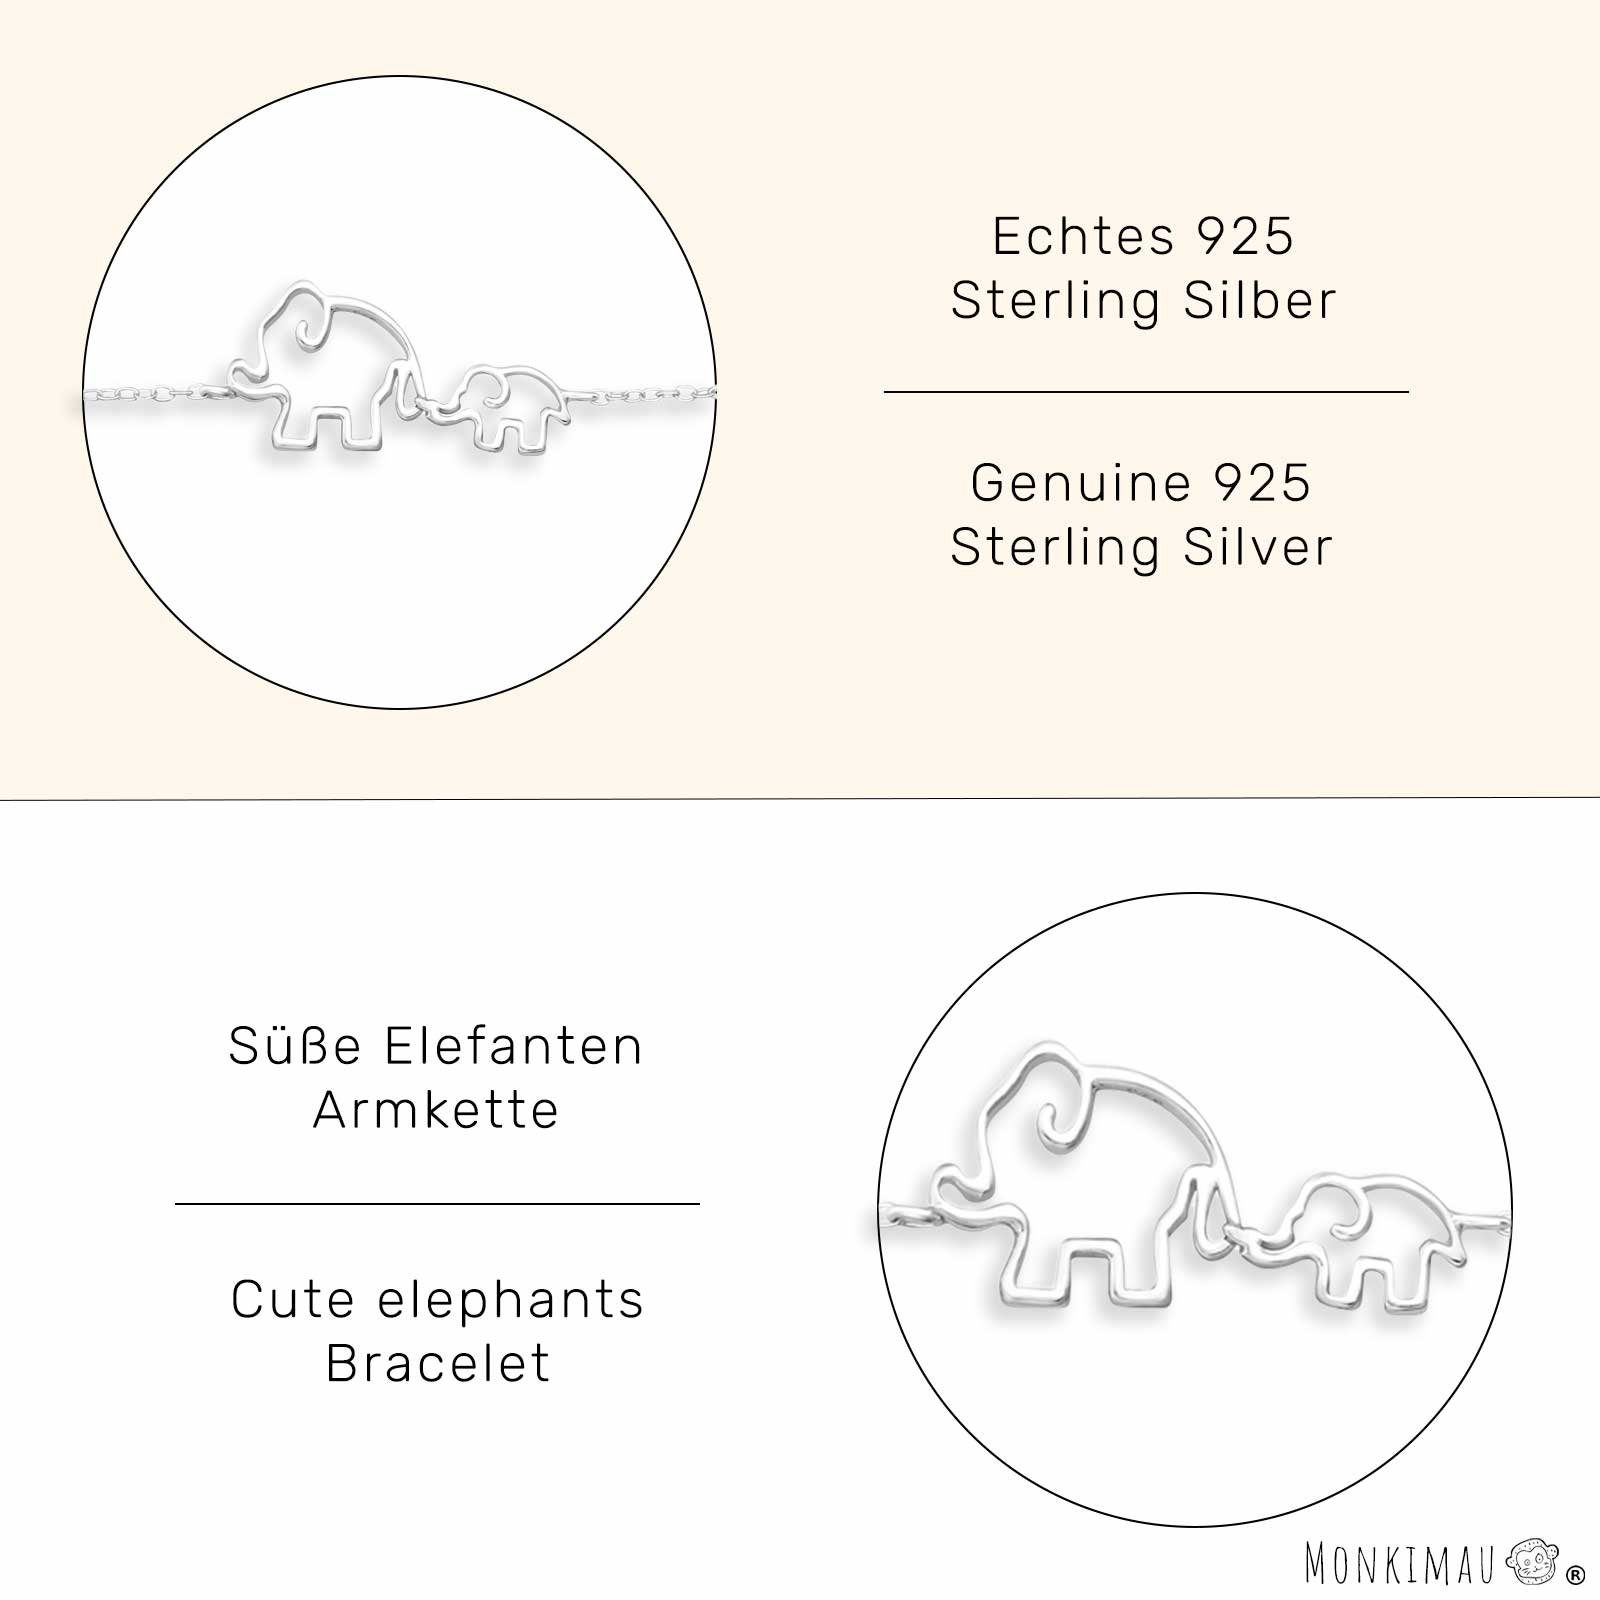 Monkimau Armkette Elefanten Armband Damen Silber Schmuck (Packung)